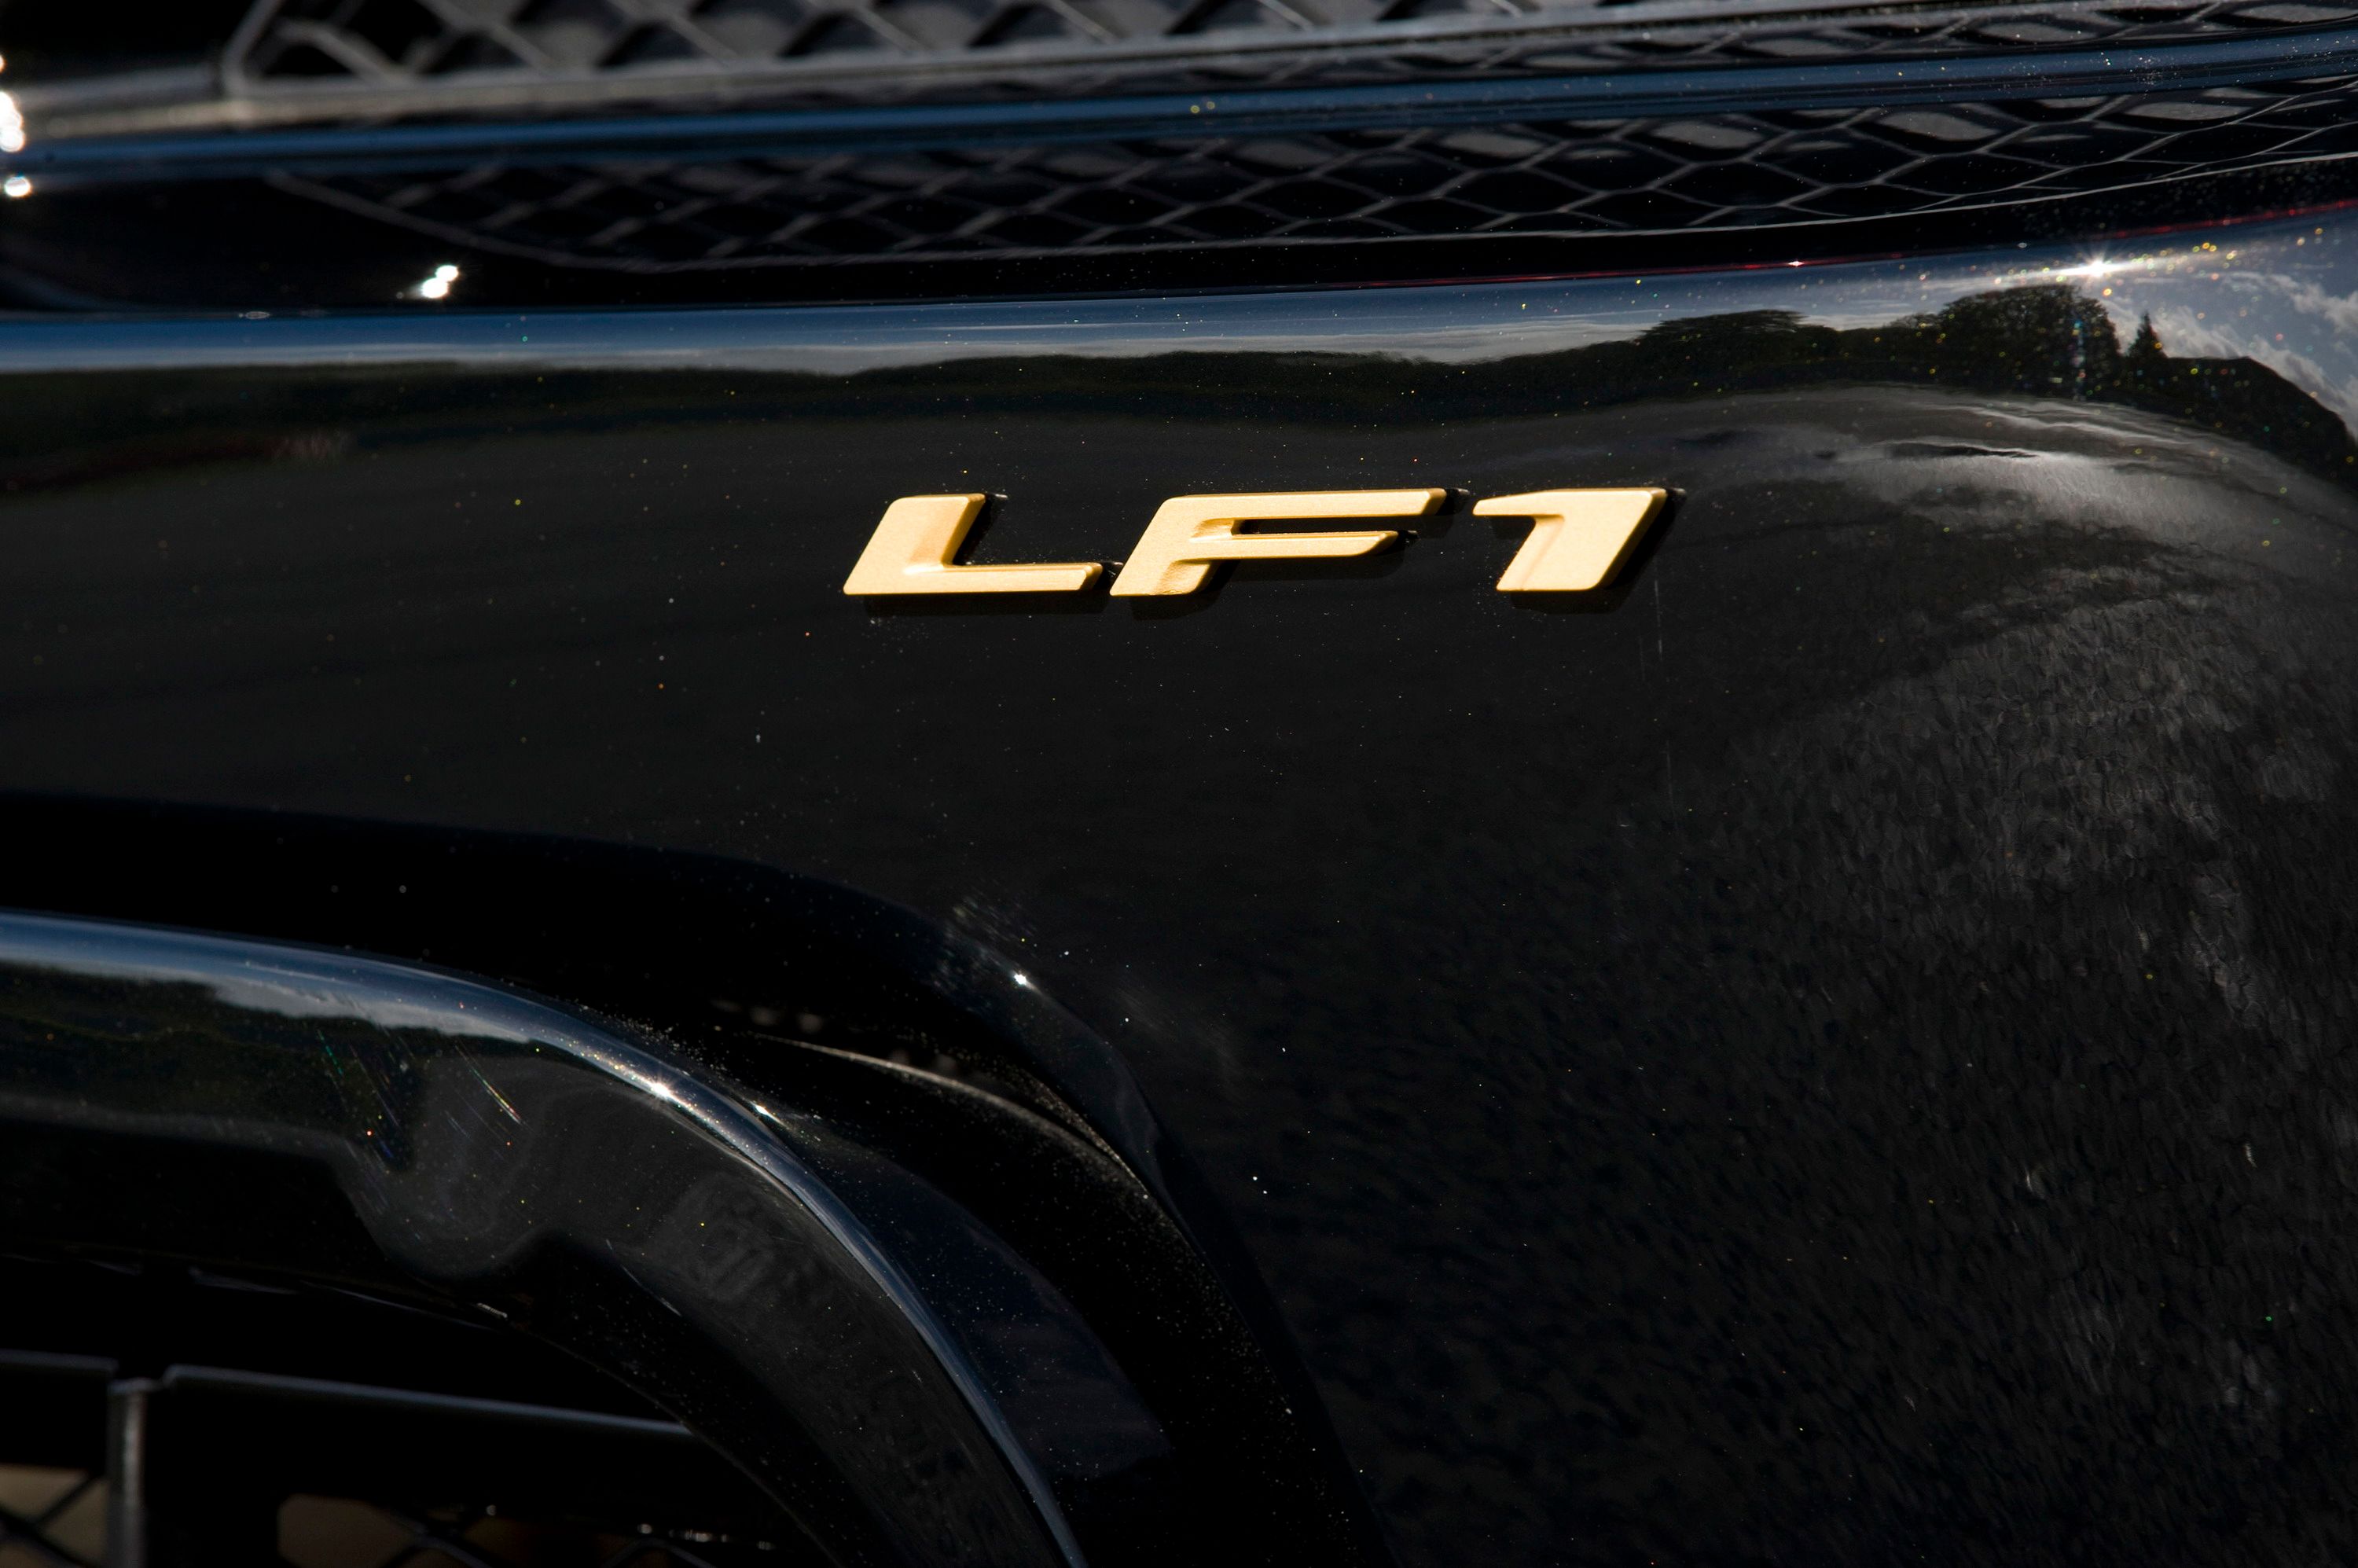 2014 Lotus Exige LF1 Limited Edition